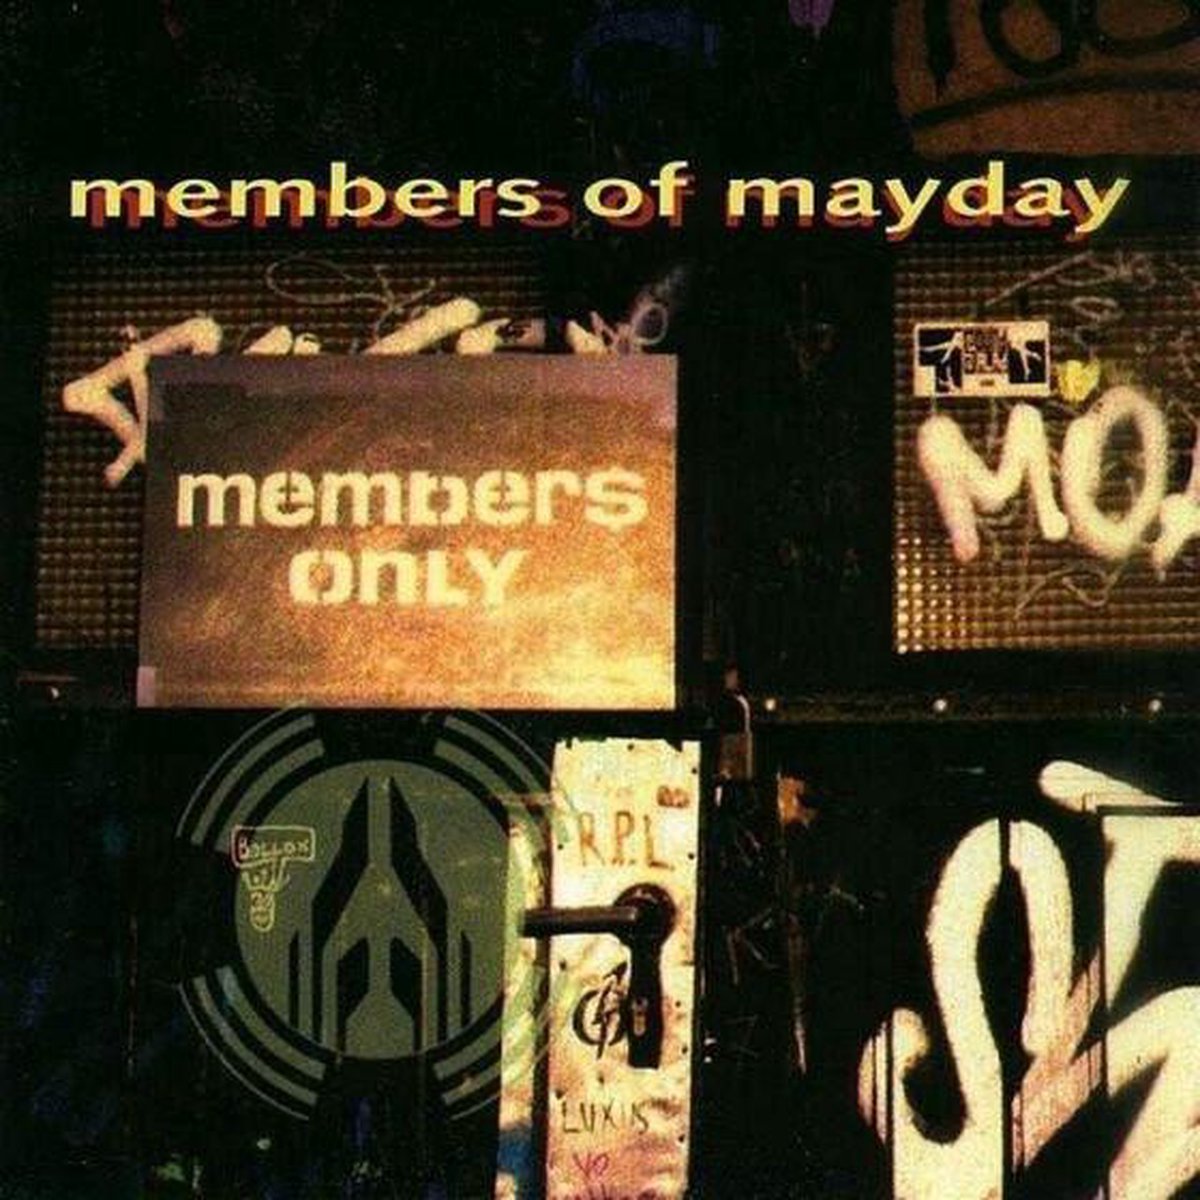 Members Only - Members Of Mayday